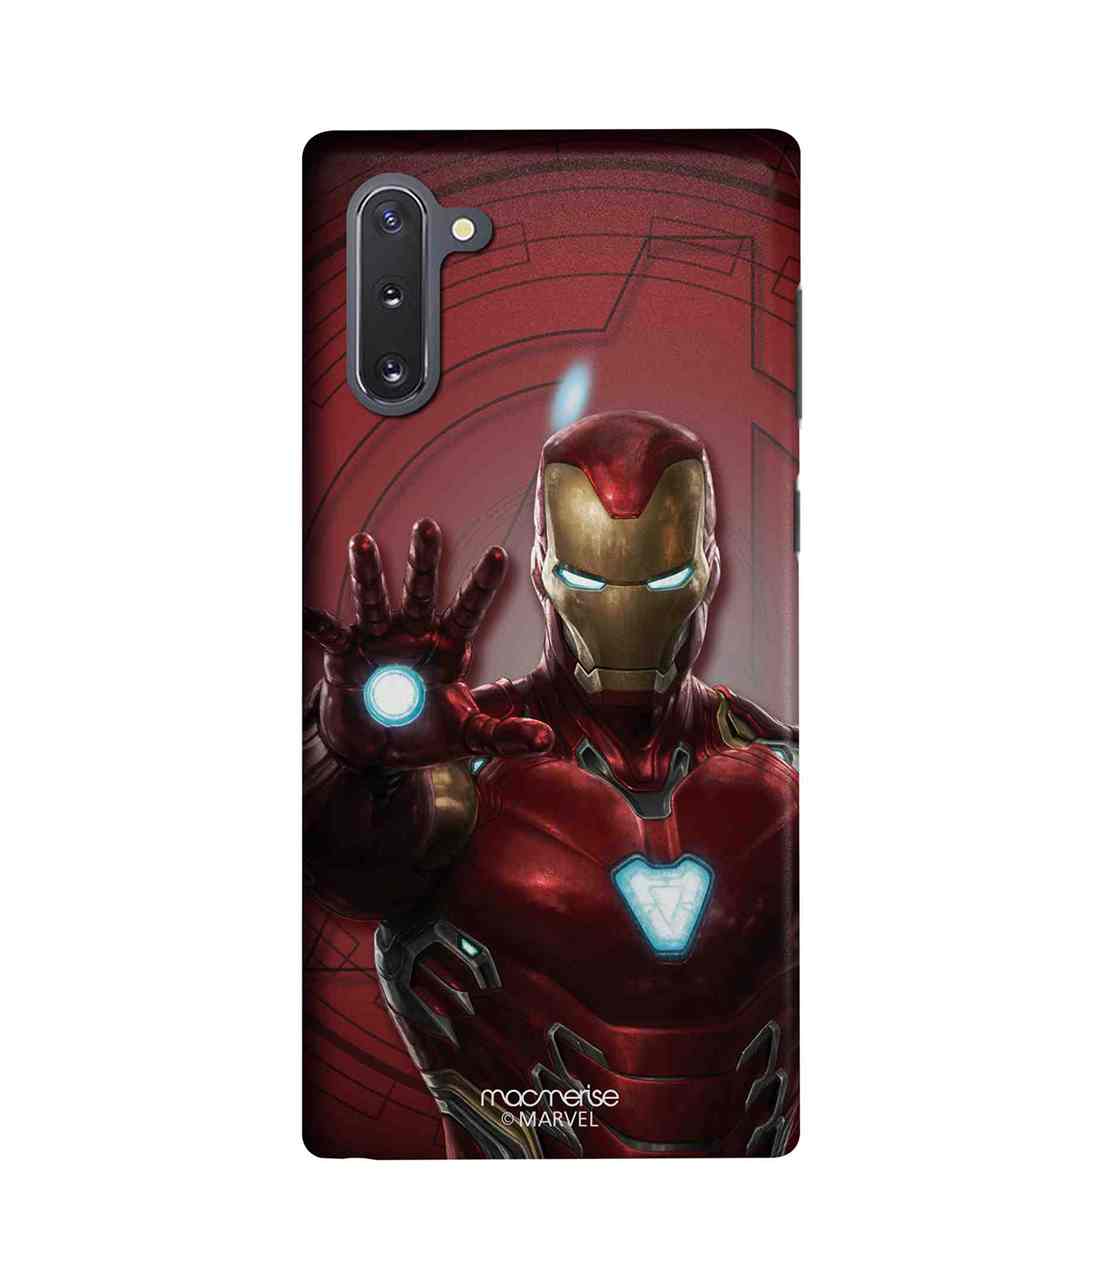 Buy Iron man Mark L Armor - Sleek Phone Case for Samsung Note10 Online